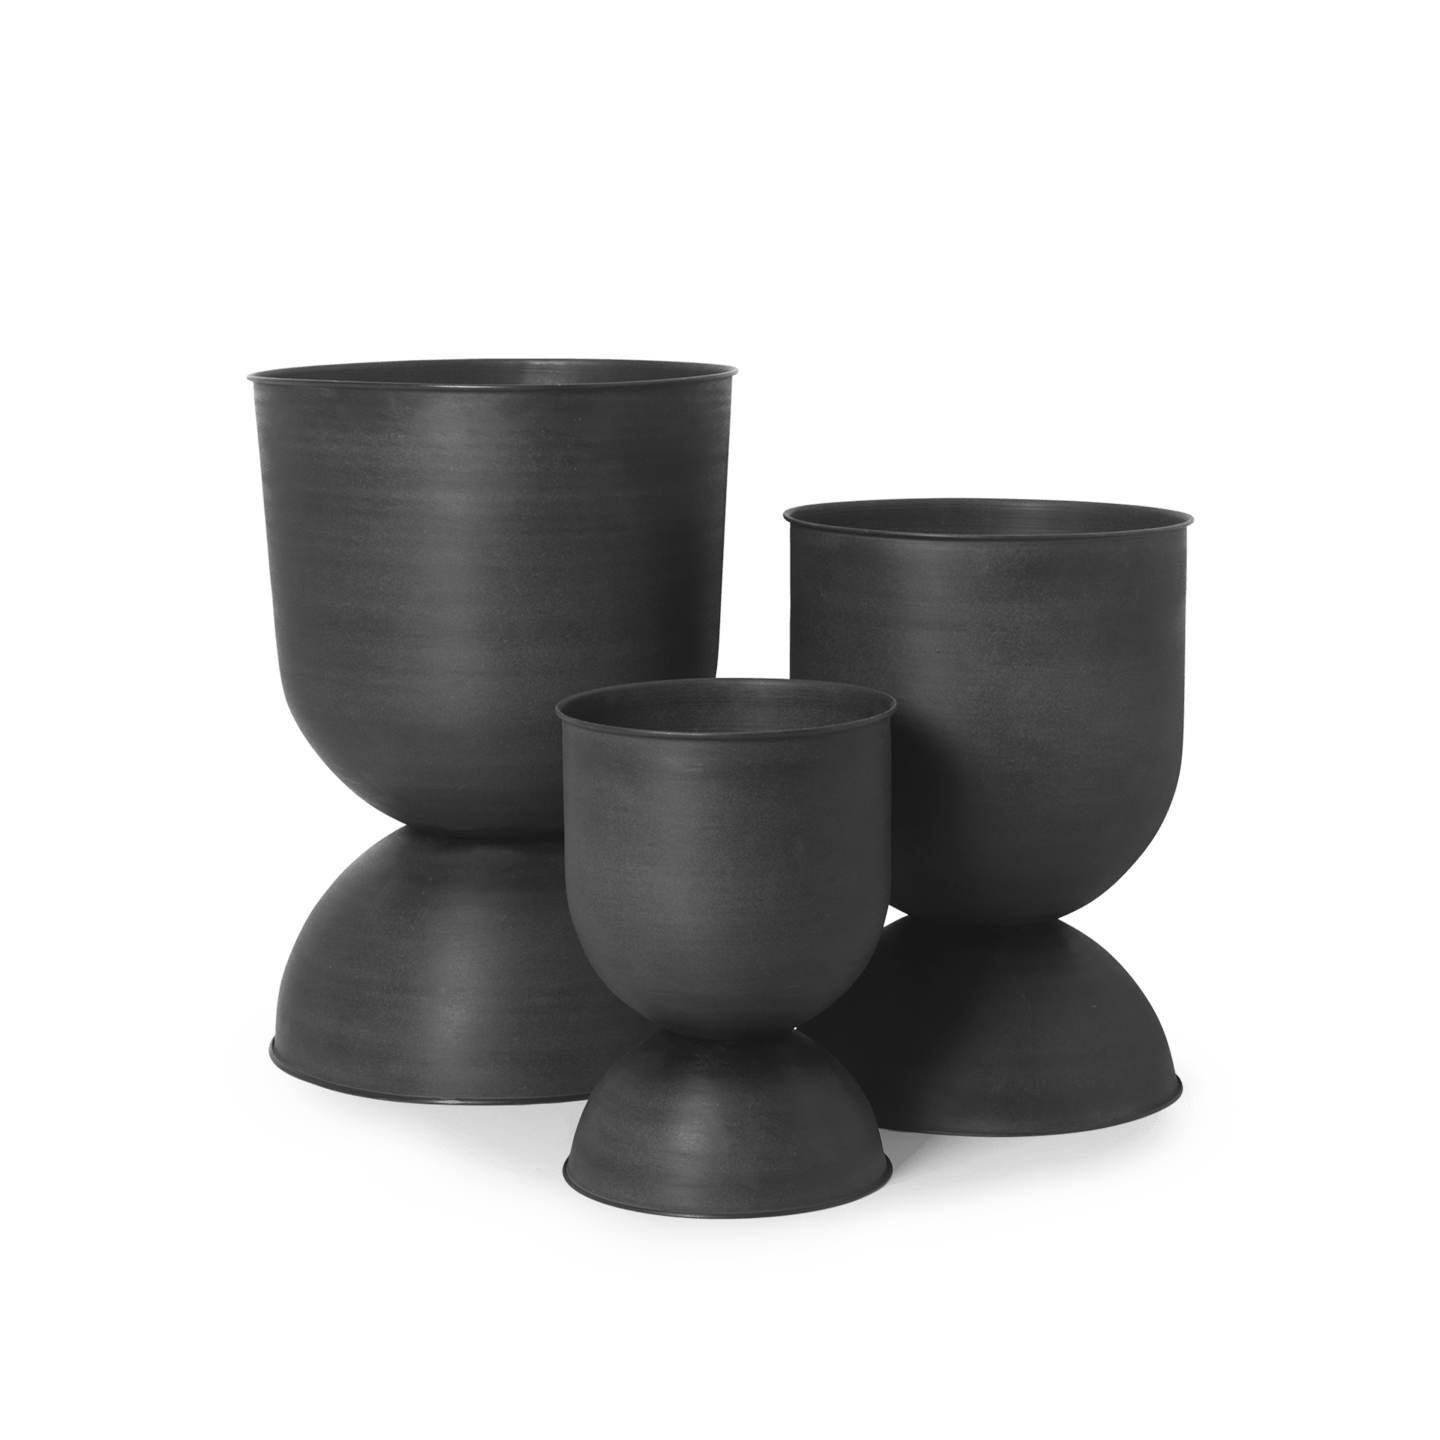 Ferm - Hourglass Pot - Small - Black - Marz DesignsFerm Living